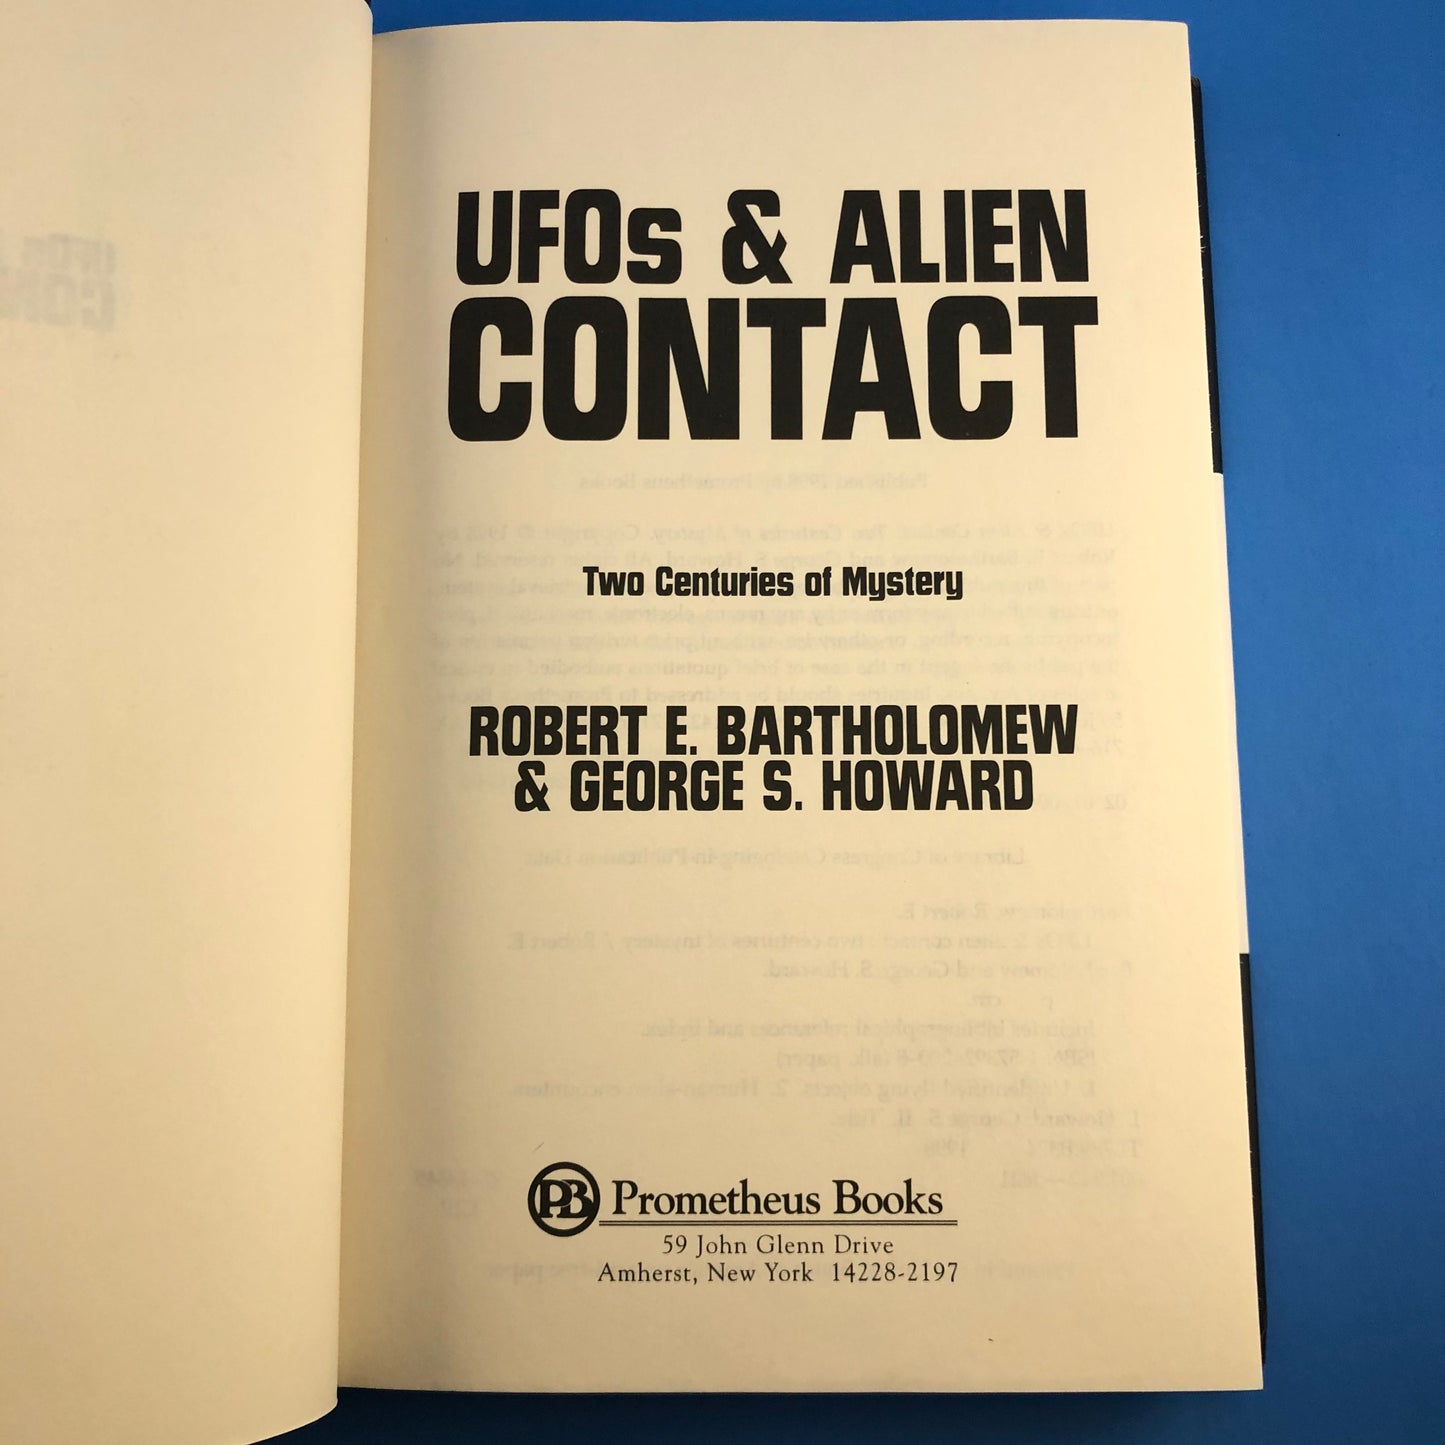 UFOs & Alien Contact